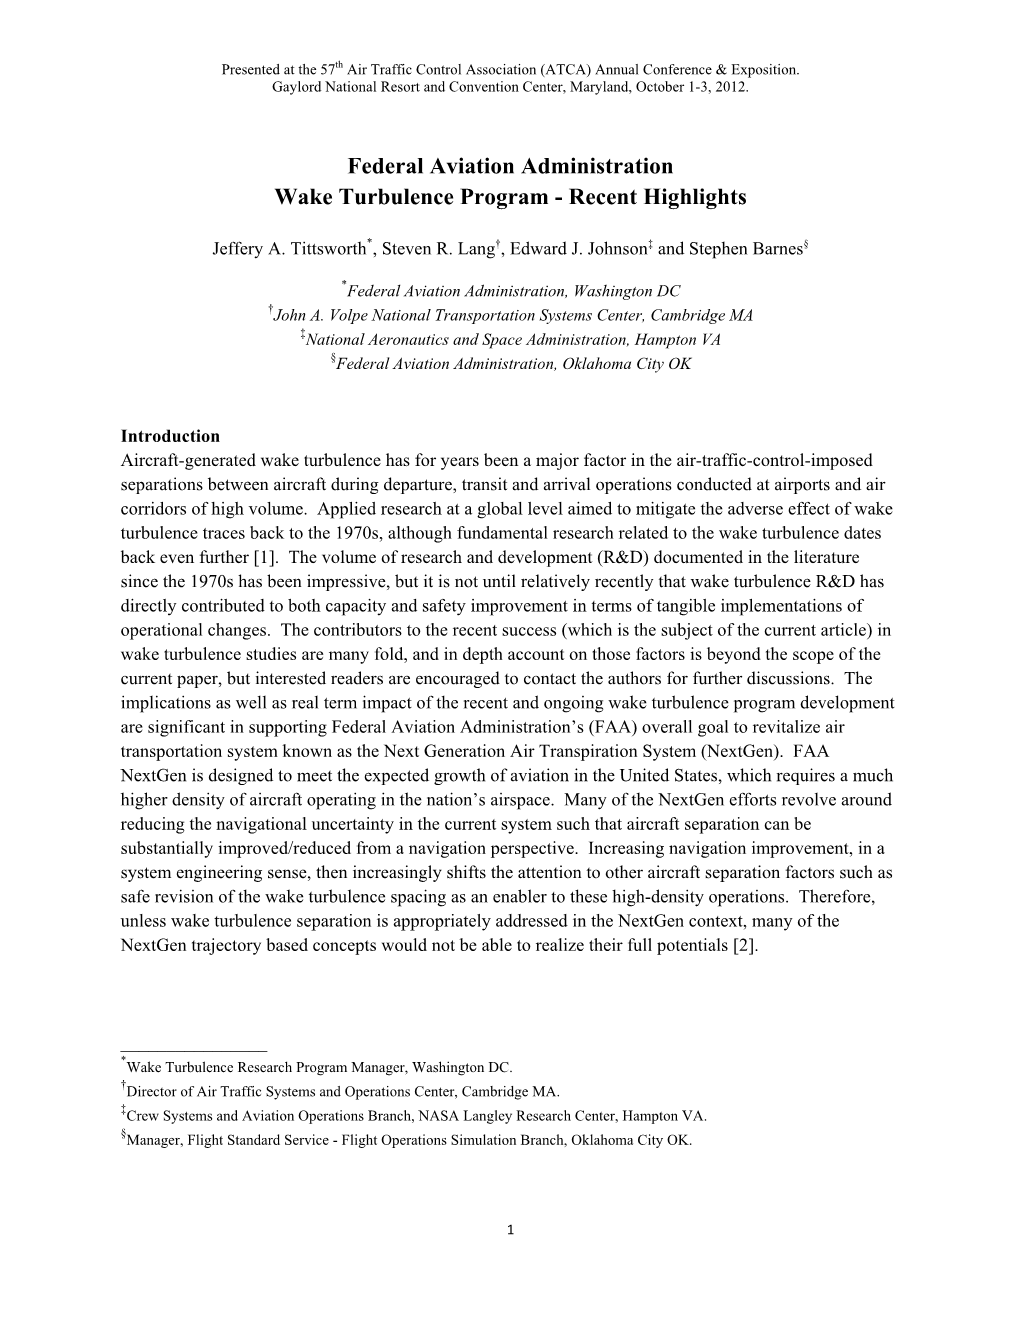 Federal Aviation Administration Wake Turbulence Program - Recent Highlights